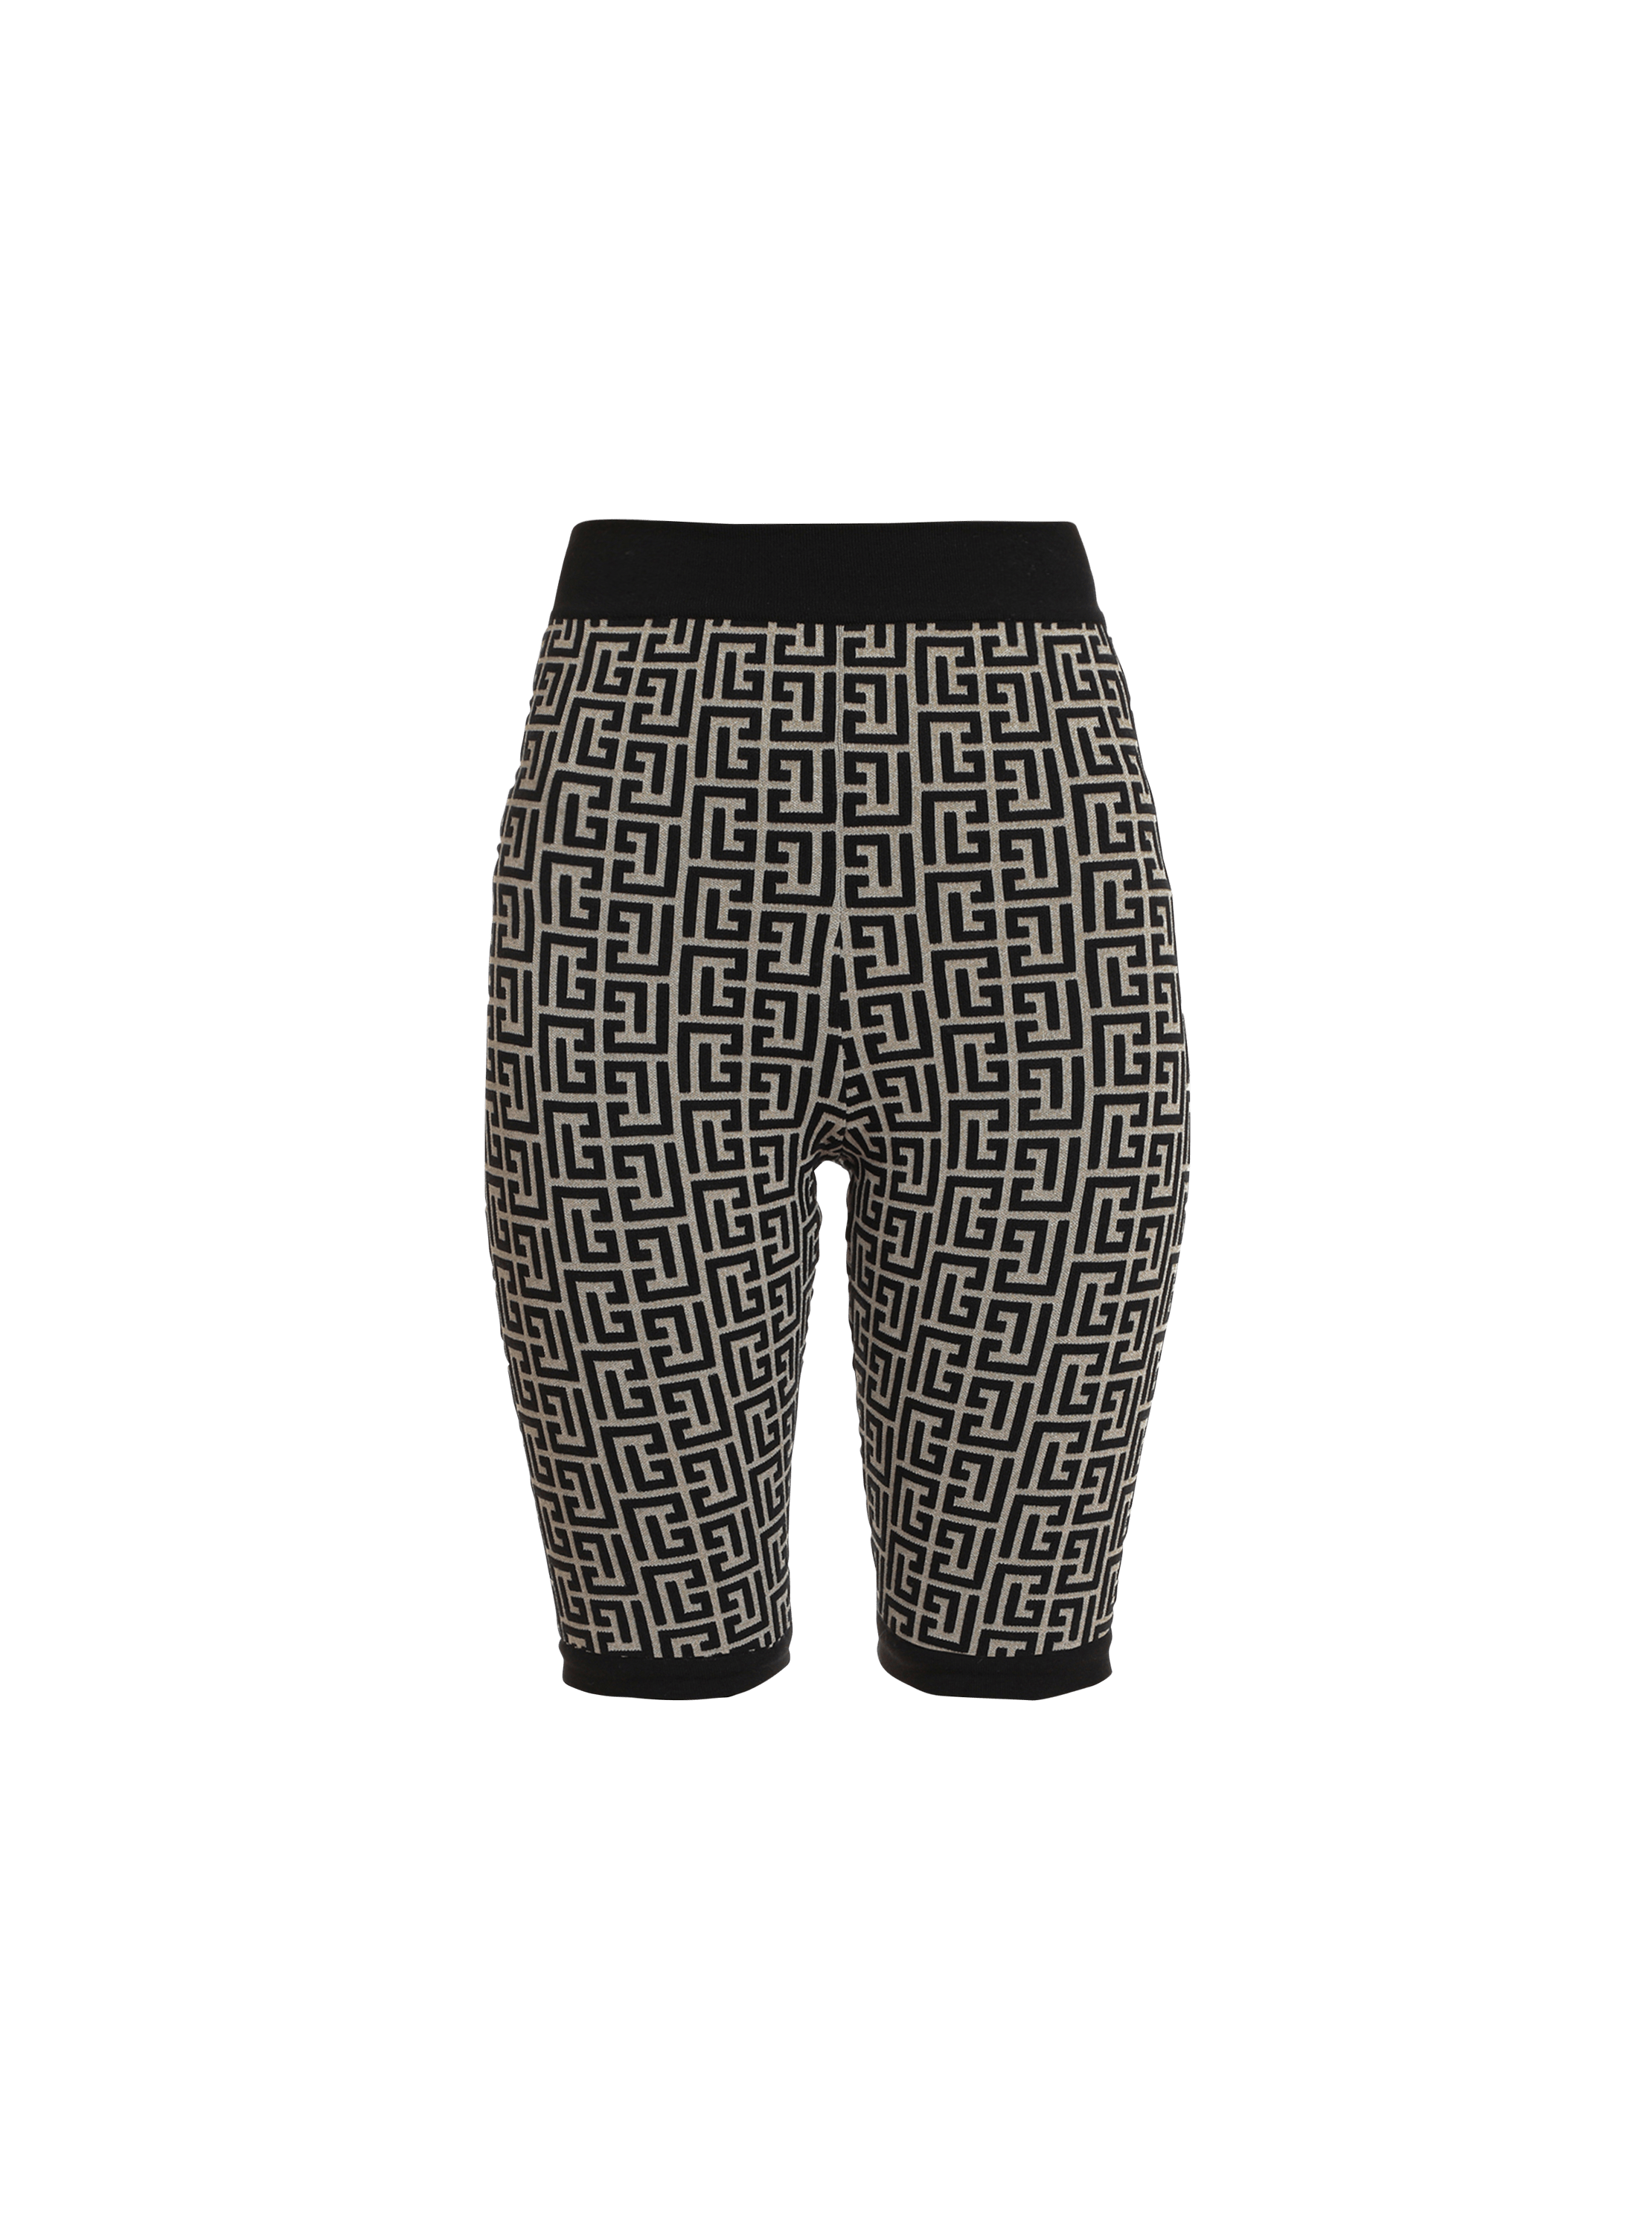 Knit Shorts - Dark gray - Ladies